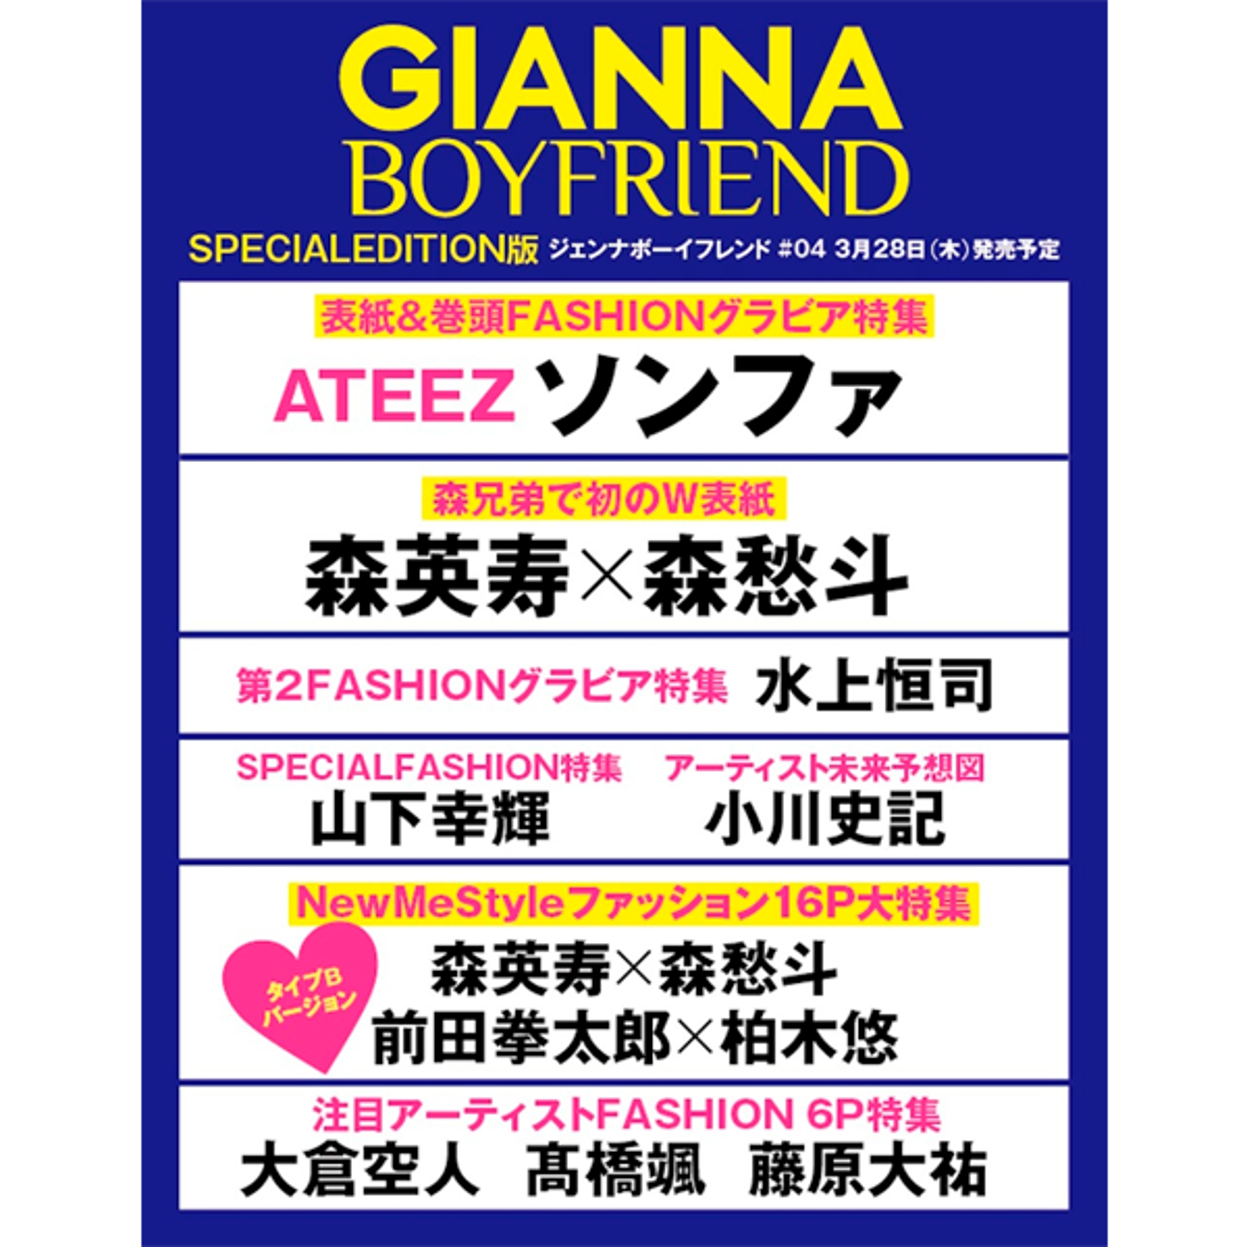 GIANNA BOYFRIEND #04 특별호 (ATEEZ 성화) (일본잡지)